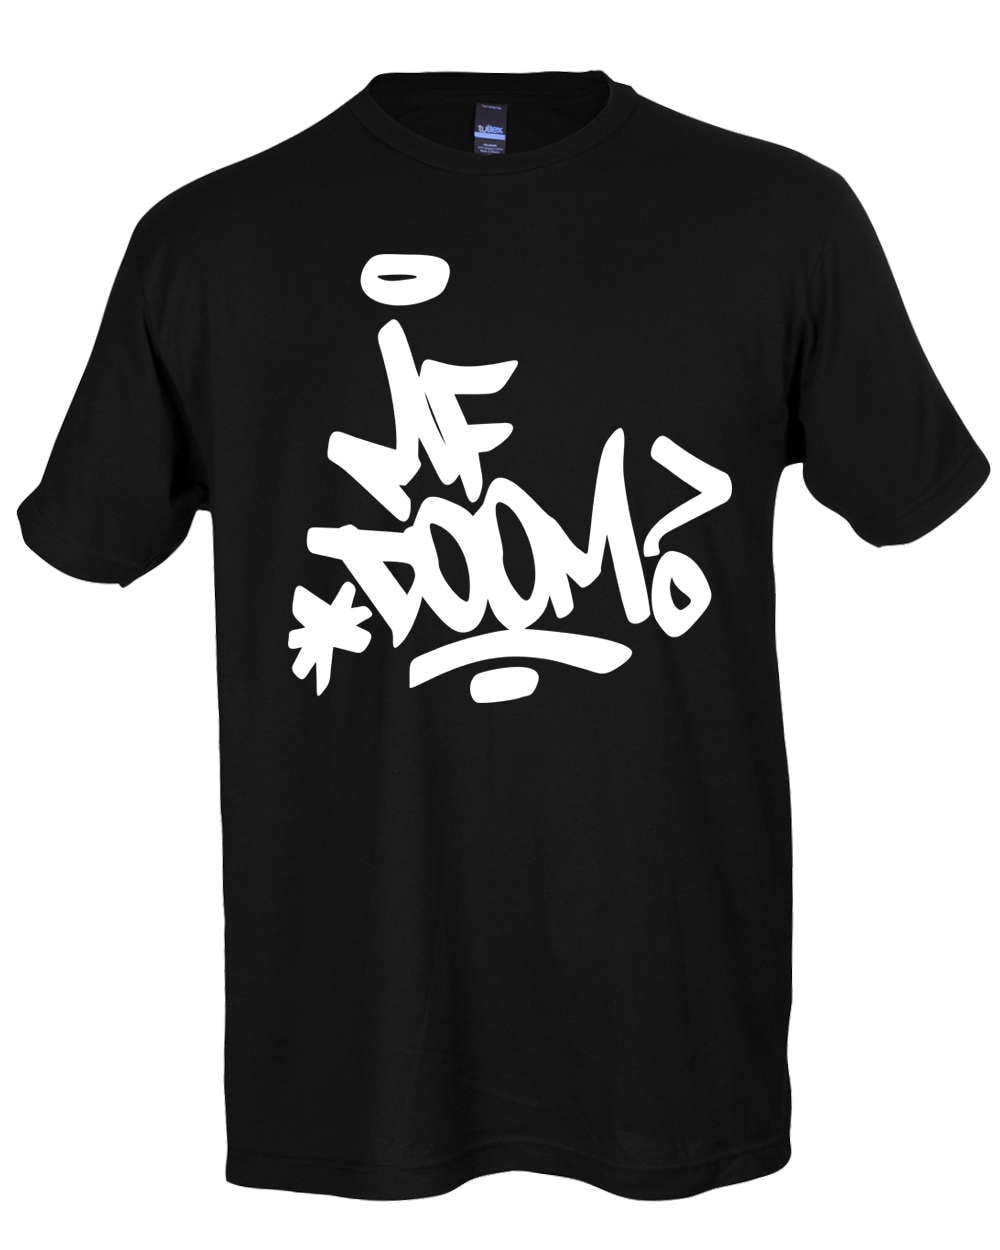 MF DOOM Graffiti Shirt Metal Face Doom T-Shirt Doom Throwie